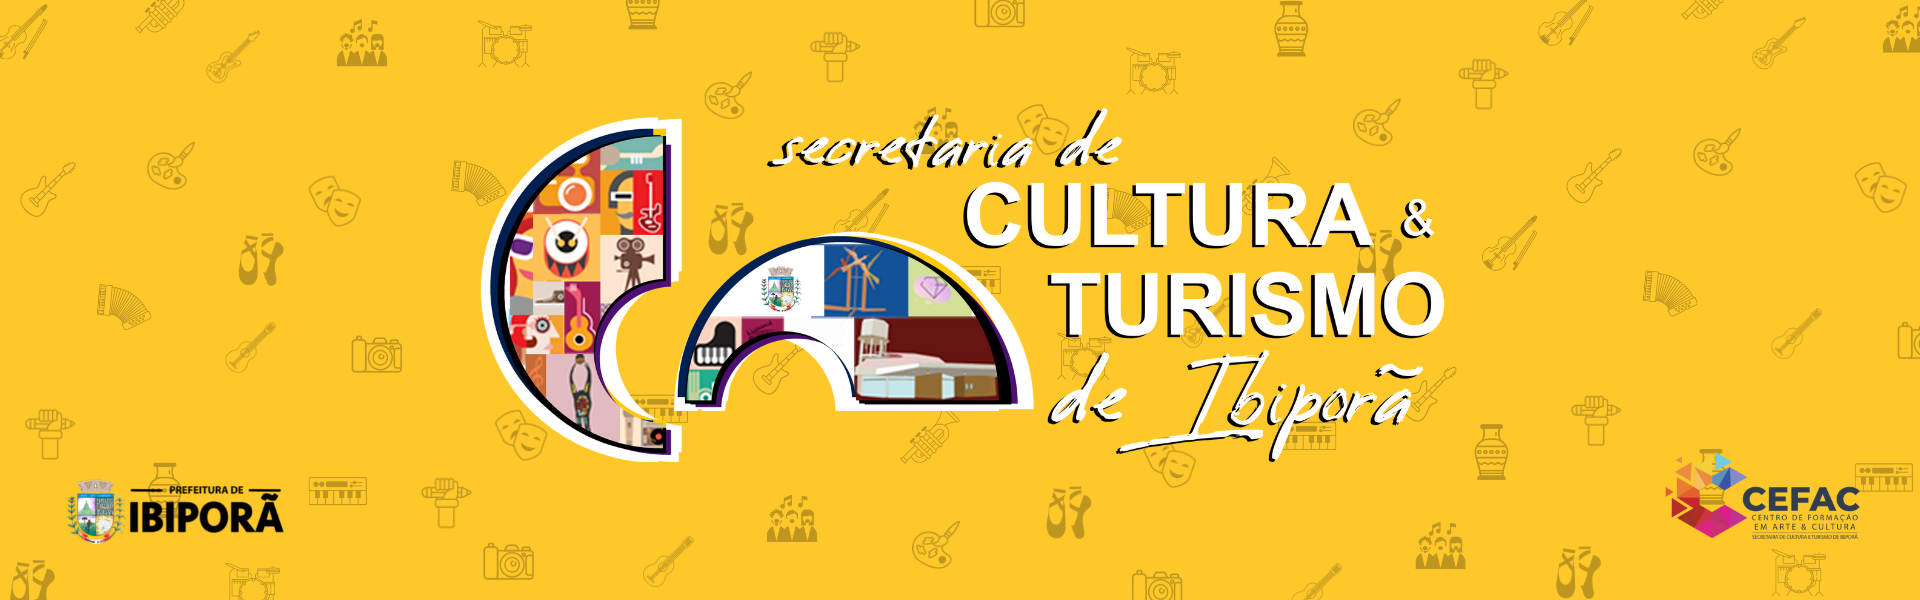 Secretaria de Cultura e Turismo de Ibiporã